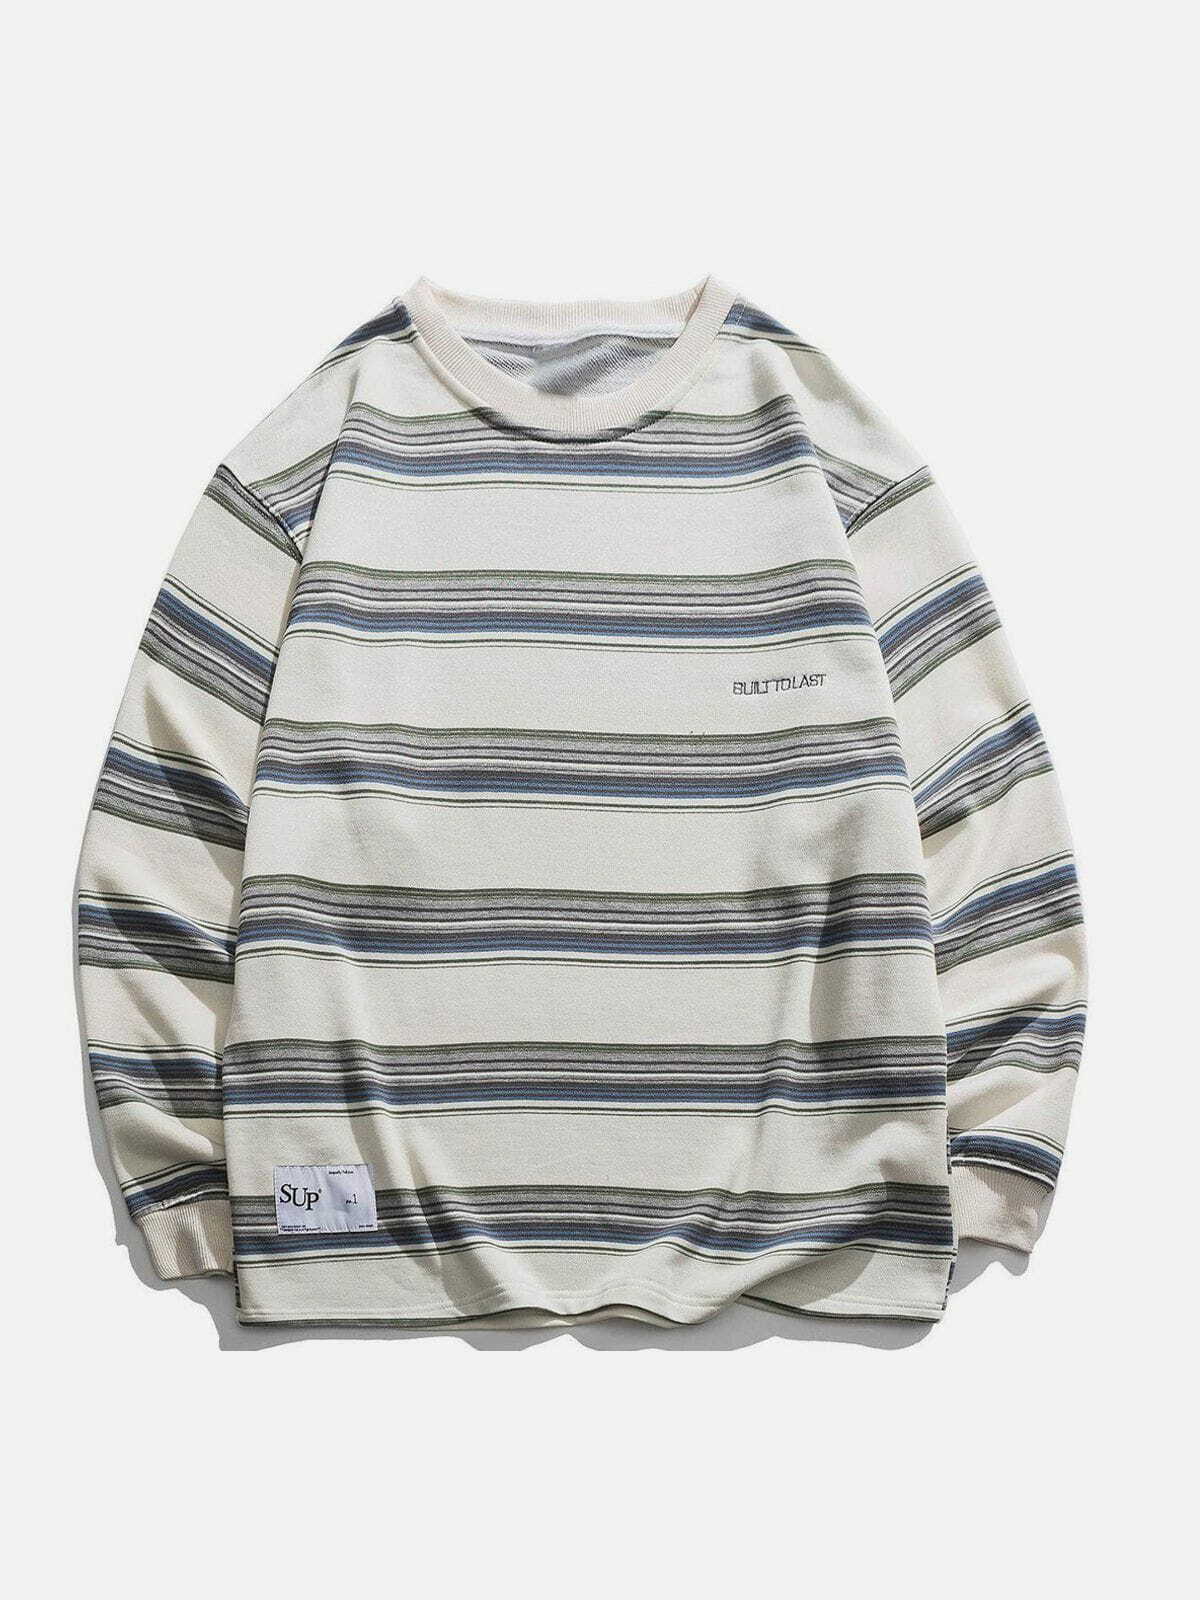 striped panel sweatshirt sleek & edgy streetwear 2105